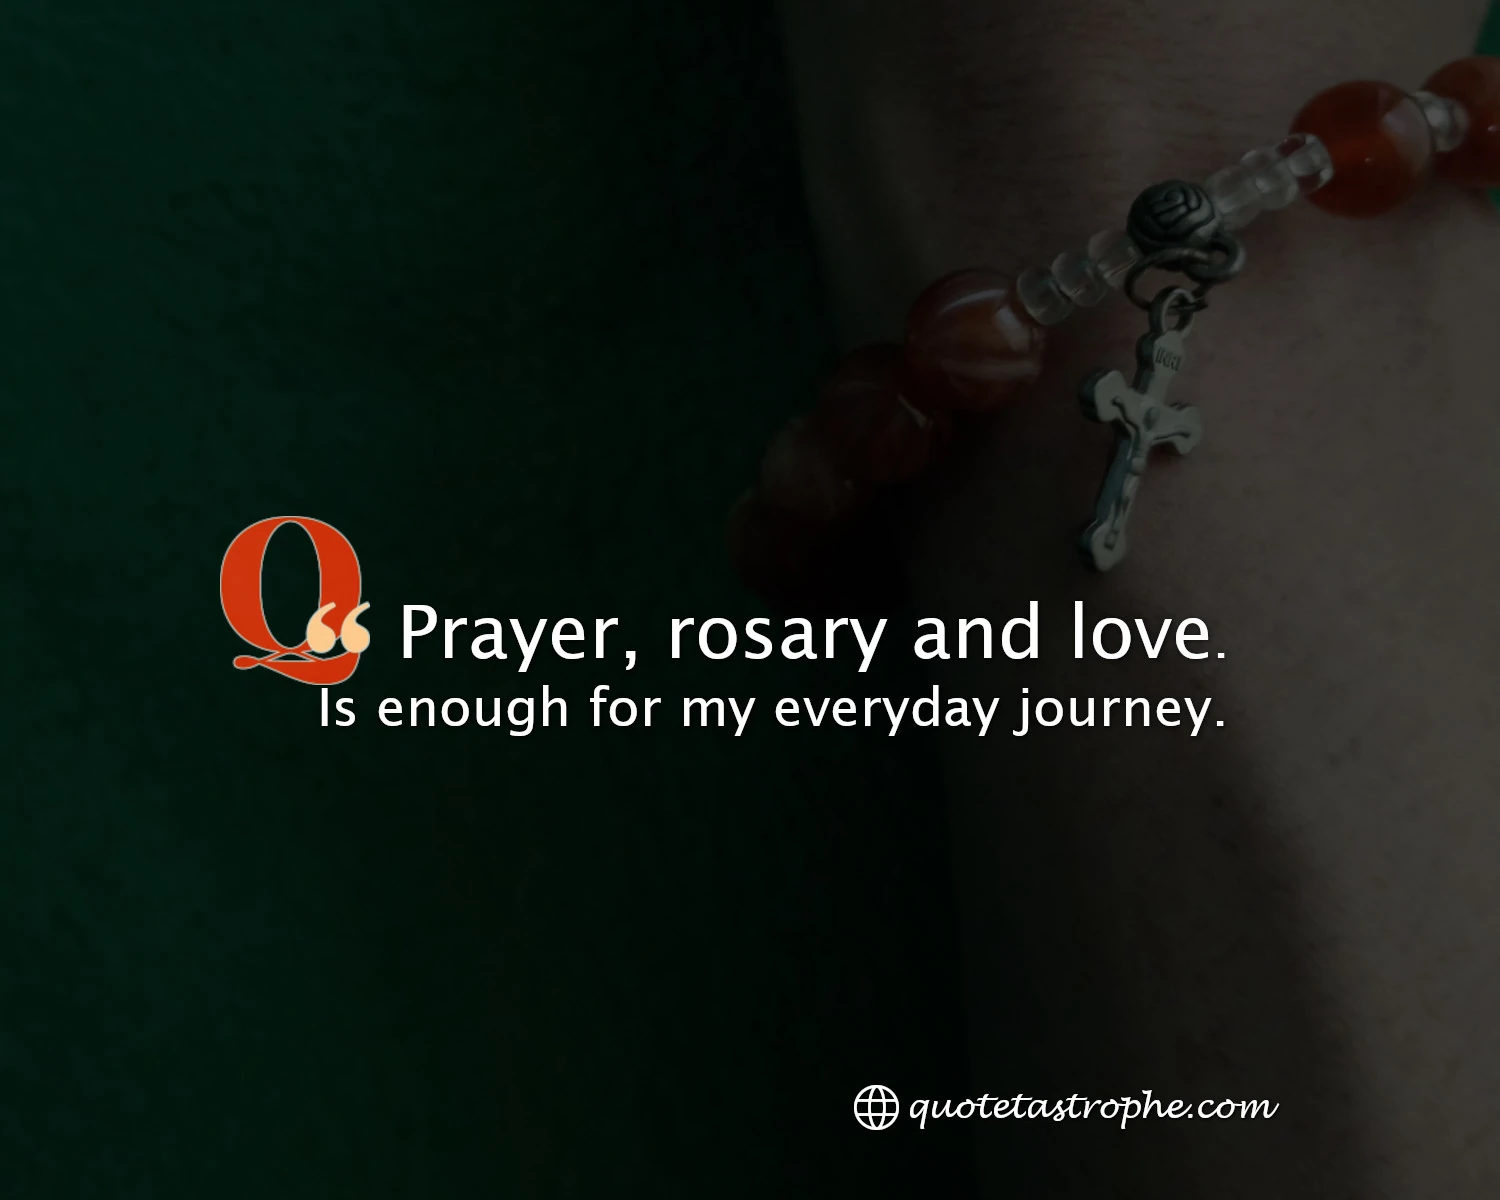 Prayer, Rosary and Love